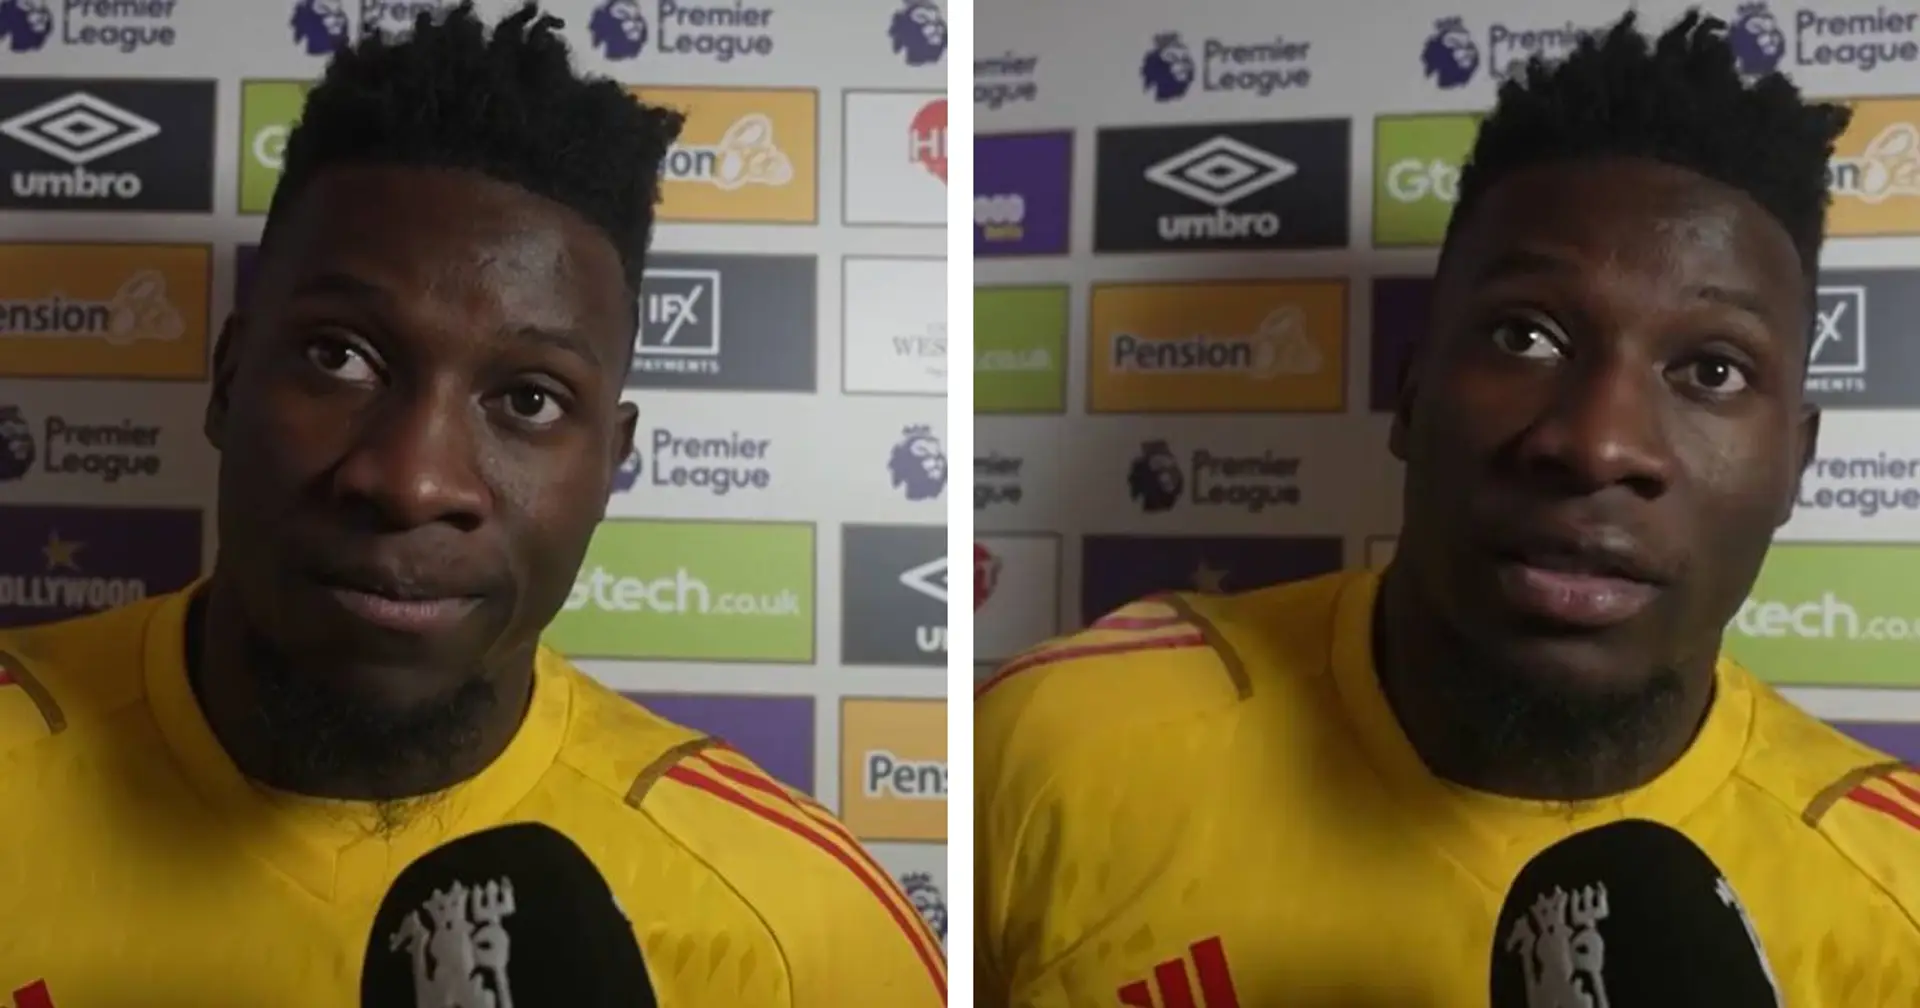 'I feel sad, we did fantastic defending': Andre Onana shares emotional response to Brentford draw